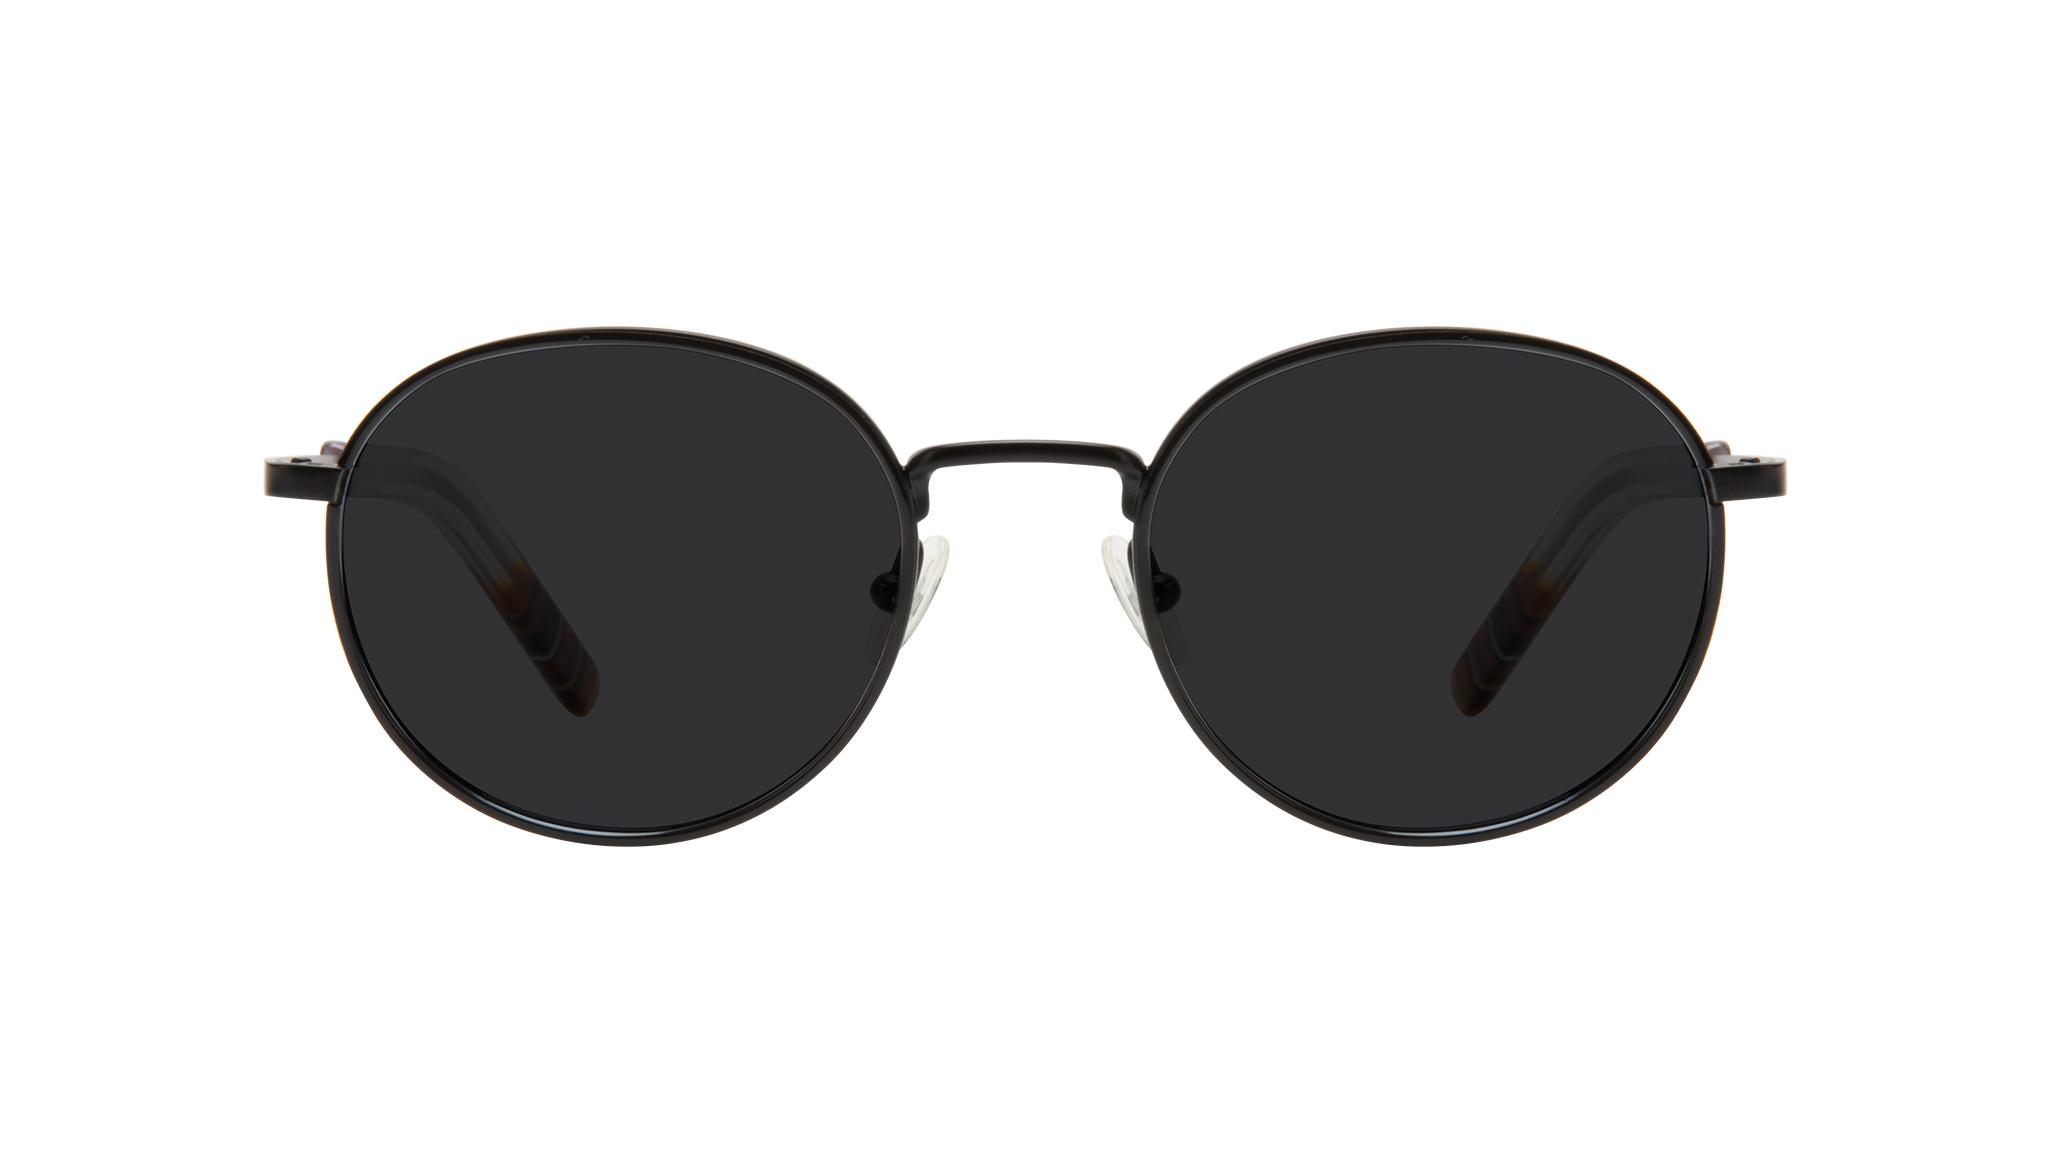 round sunglasses glasses